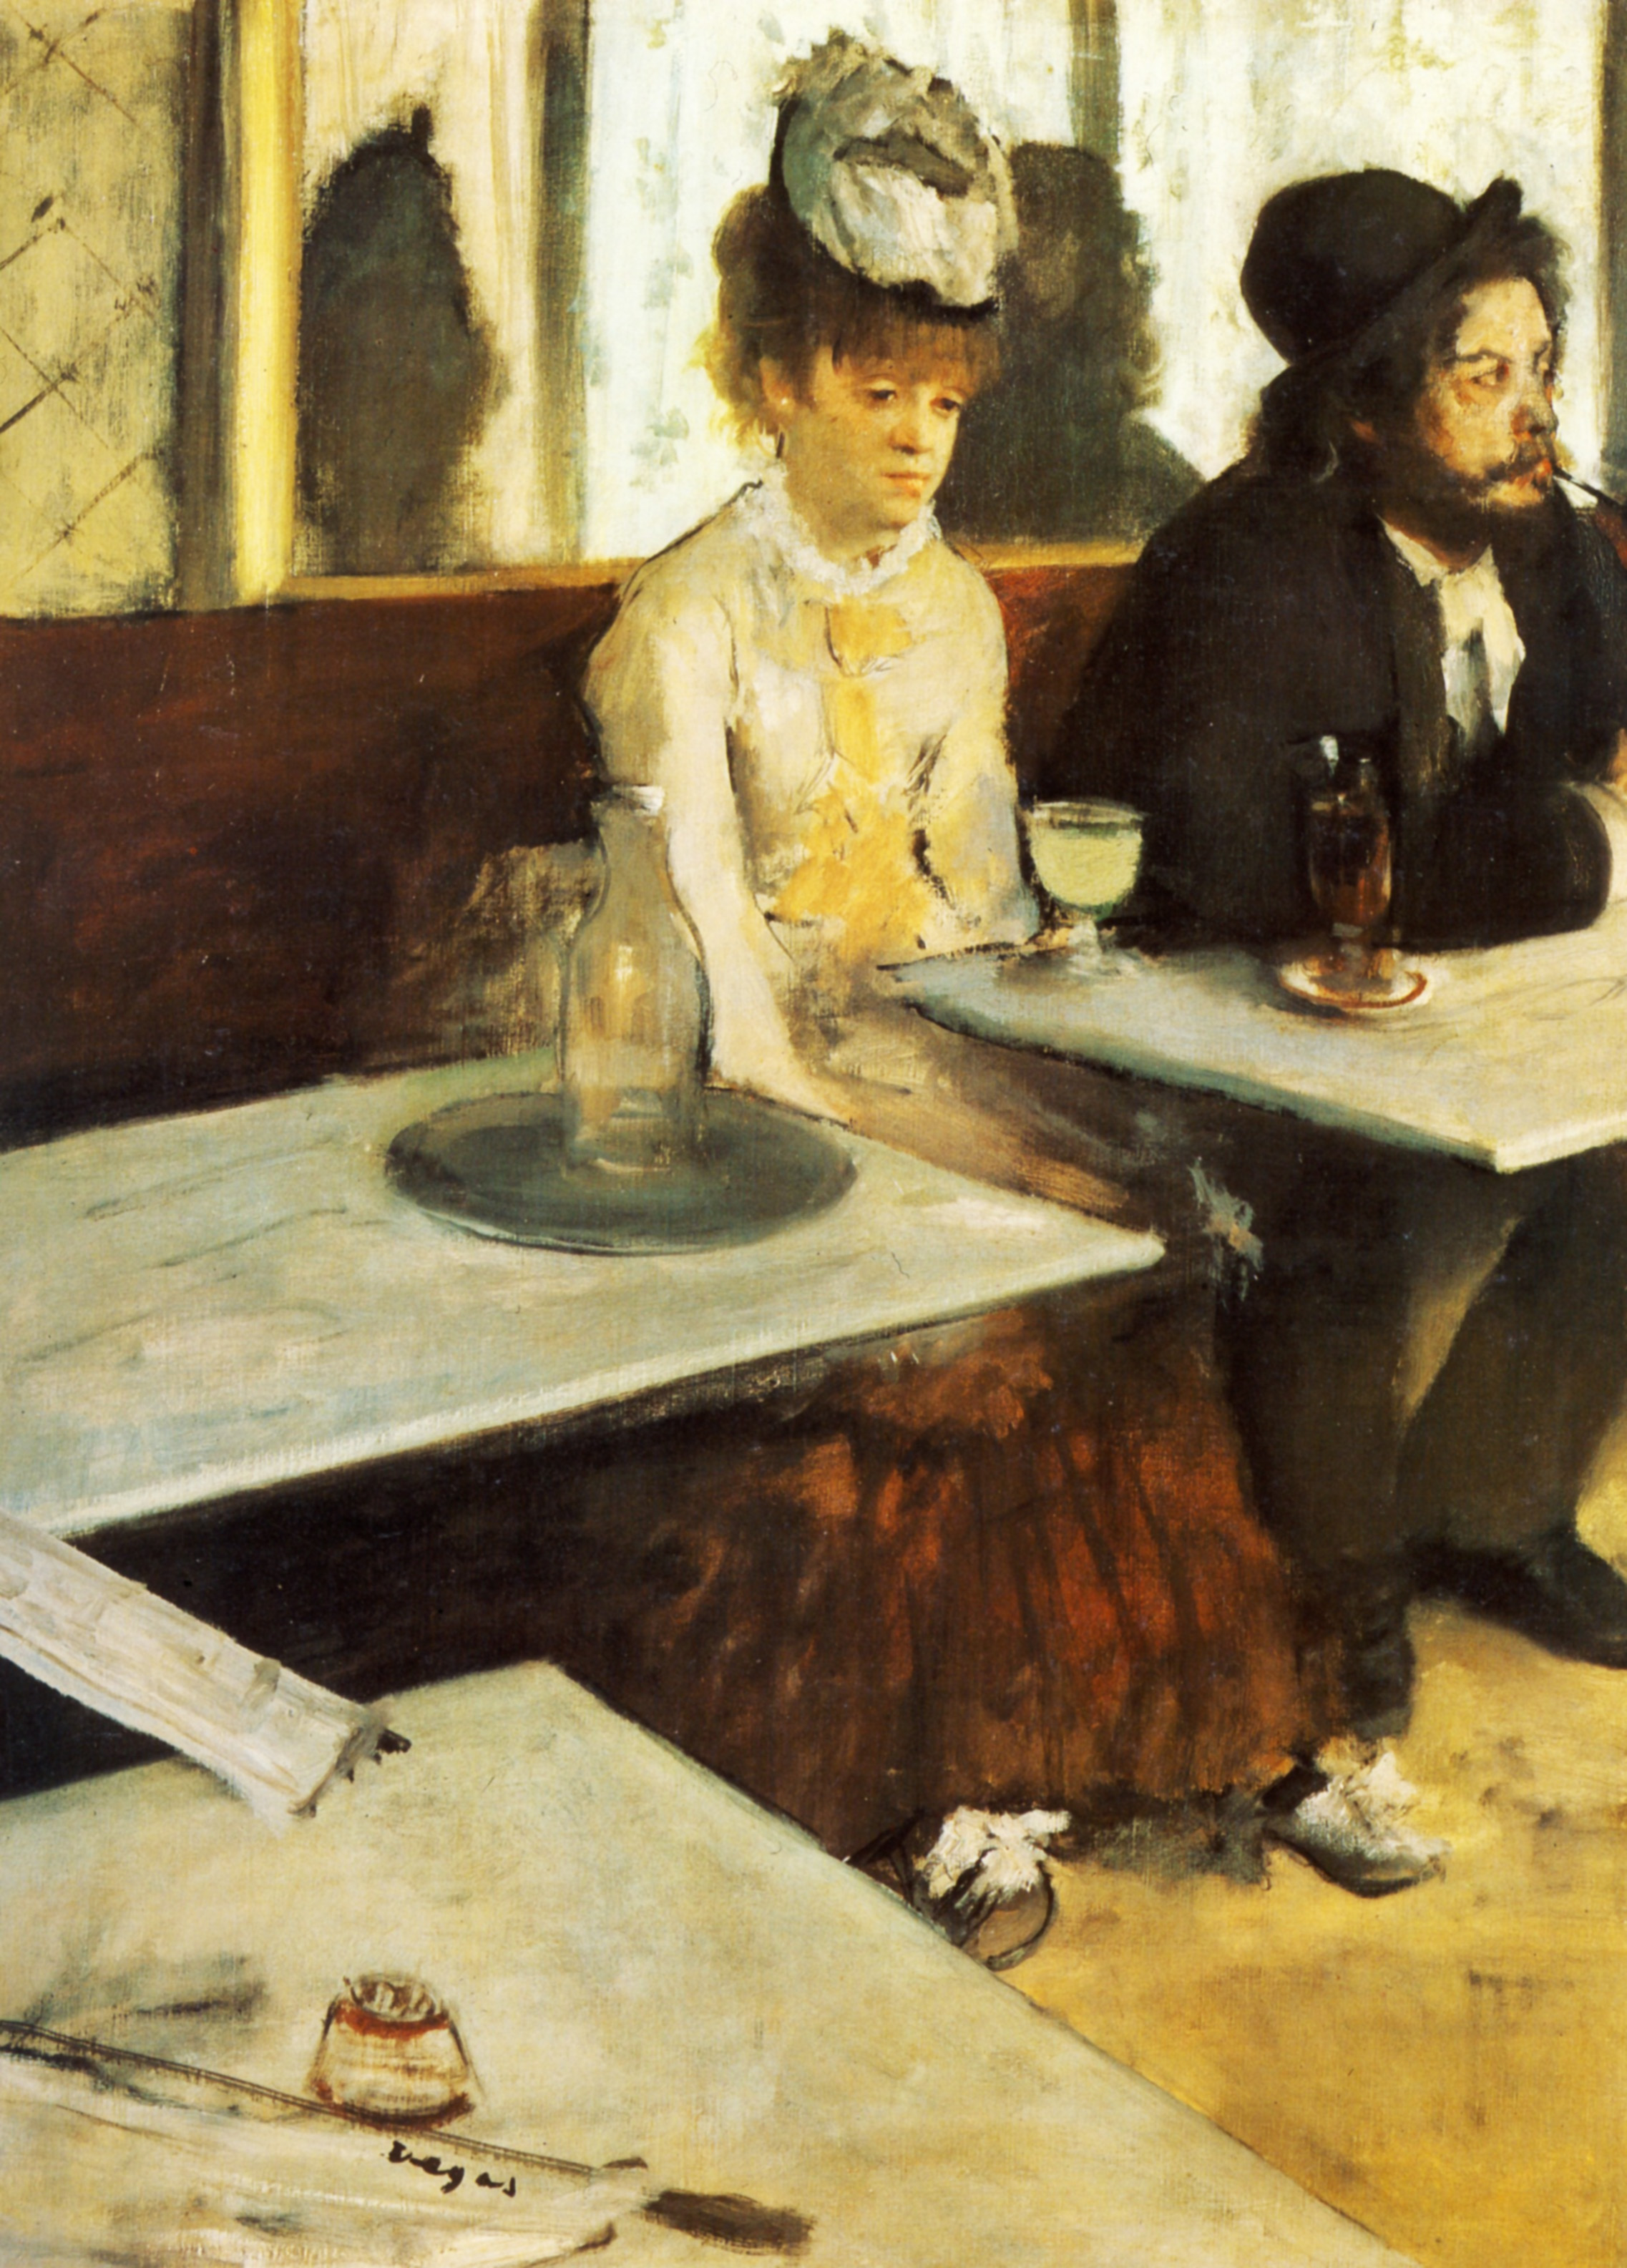 Degas, The Absinth Drinker (1867)